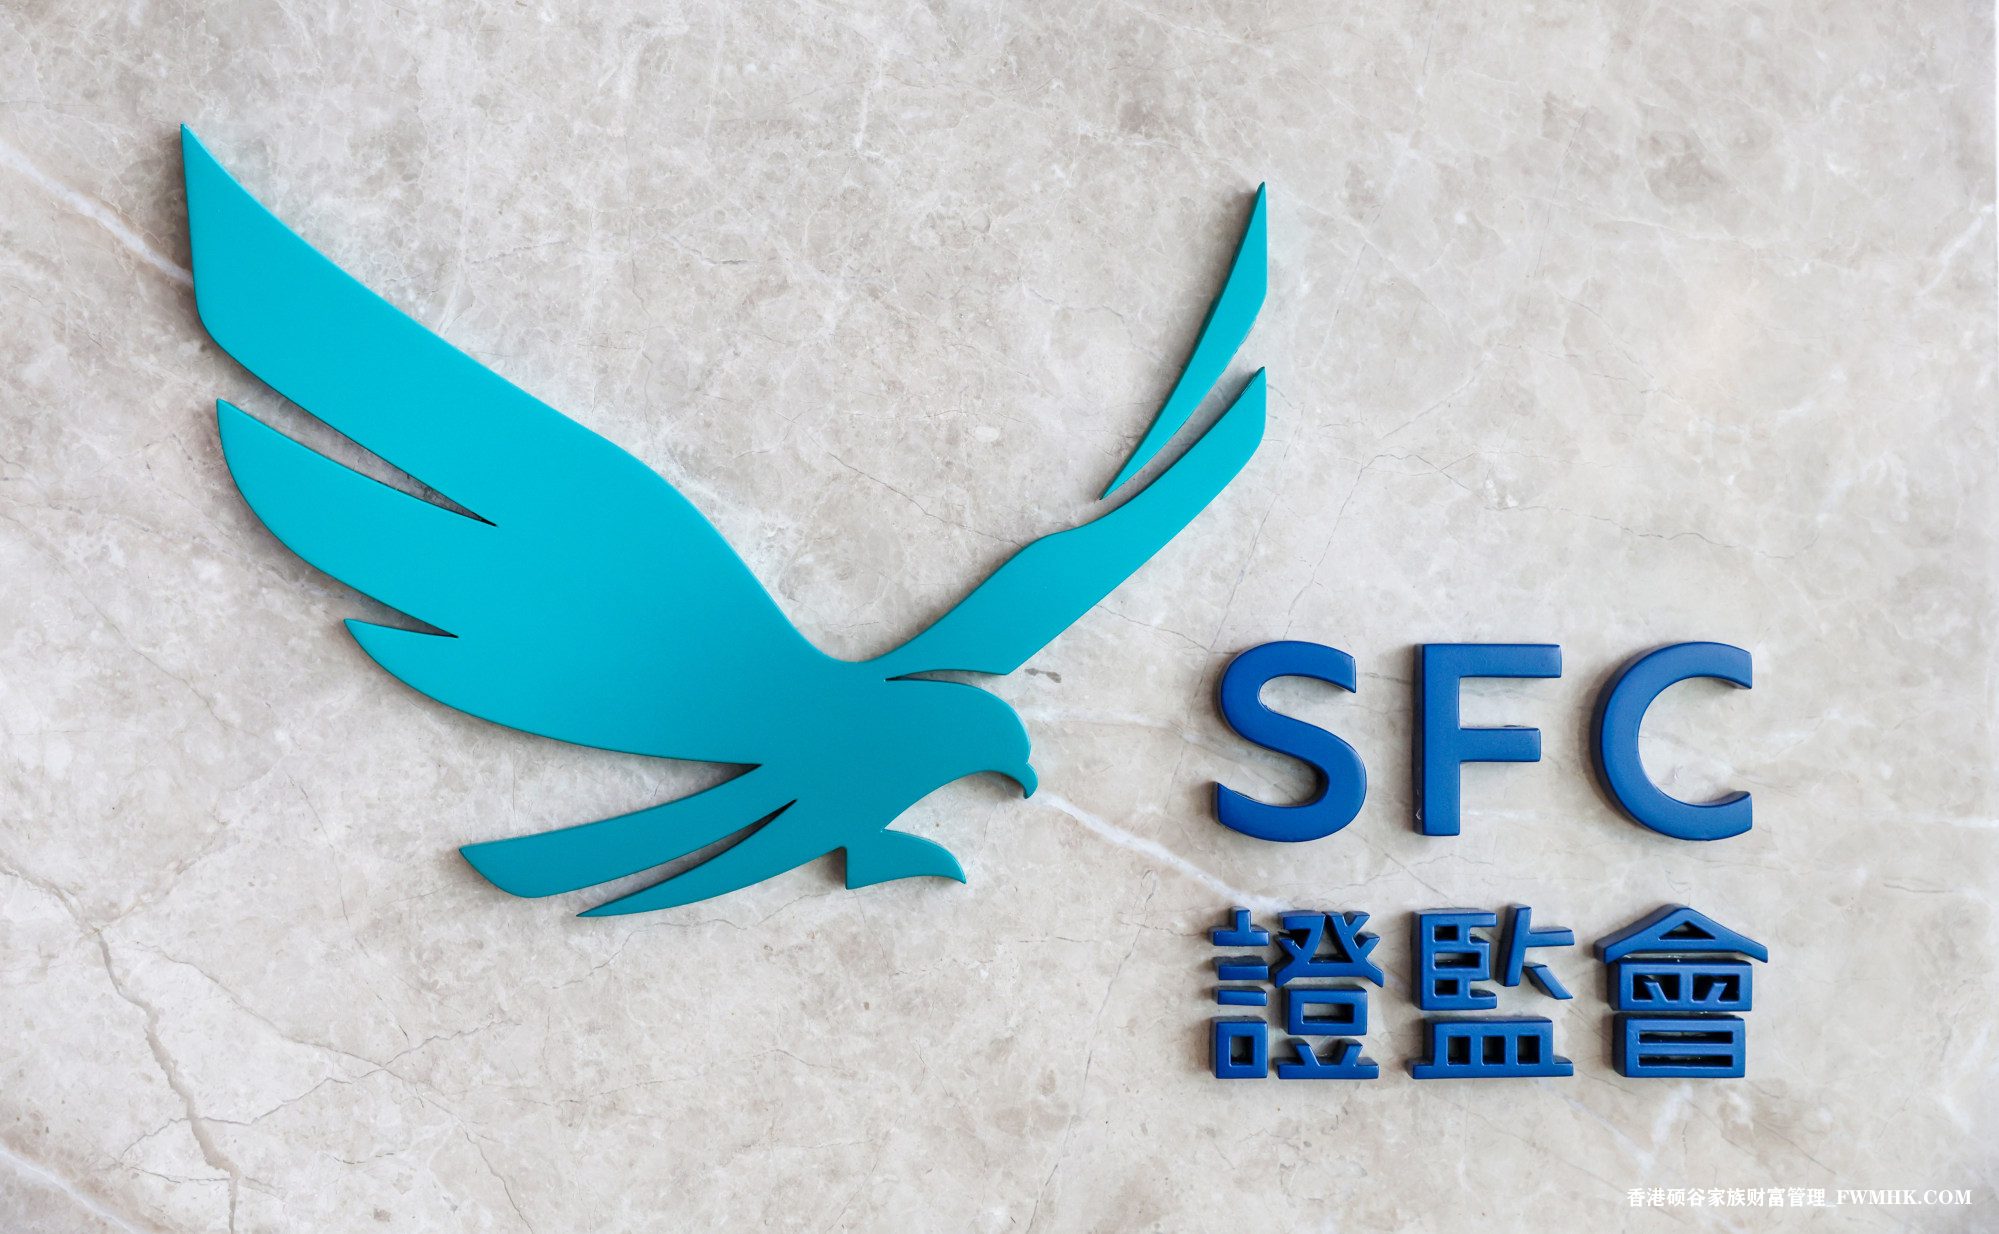 BC Technology集团否认正在出售OSL加密货币交易所，因香港许可证问题导致其股价暴跌。